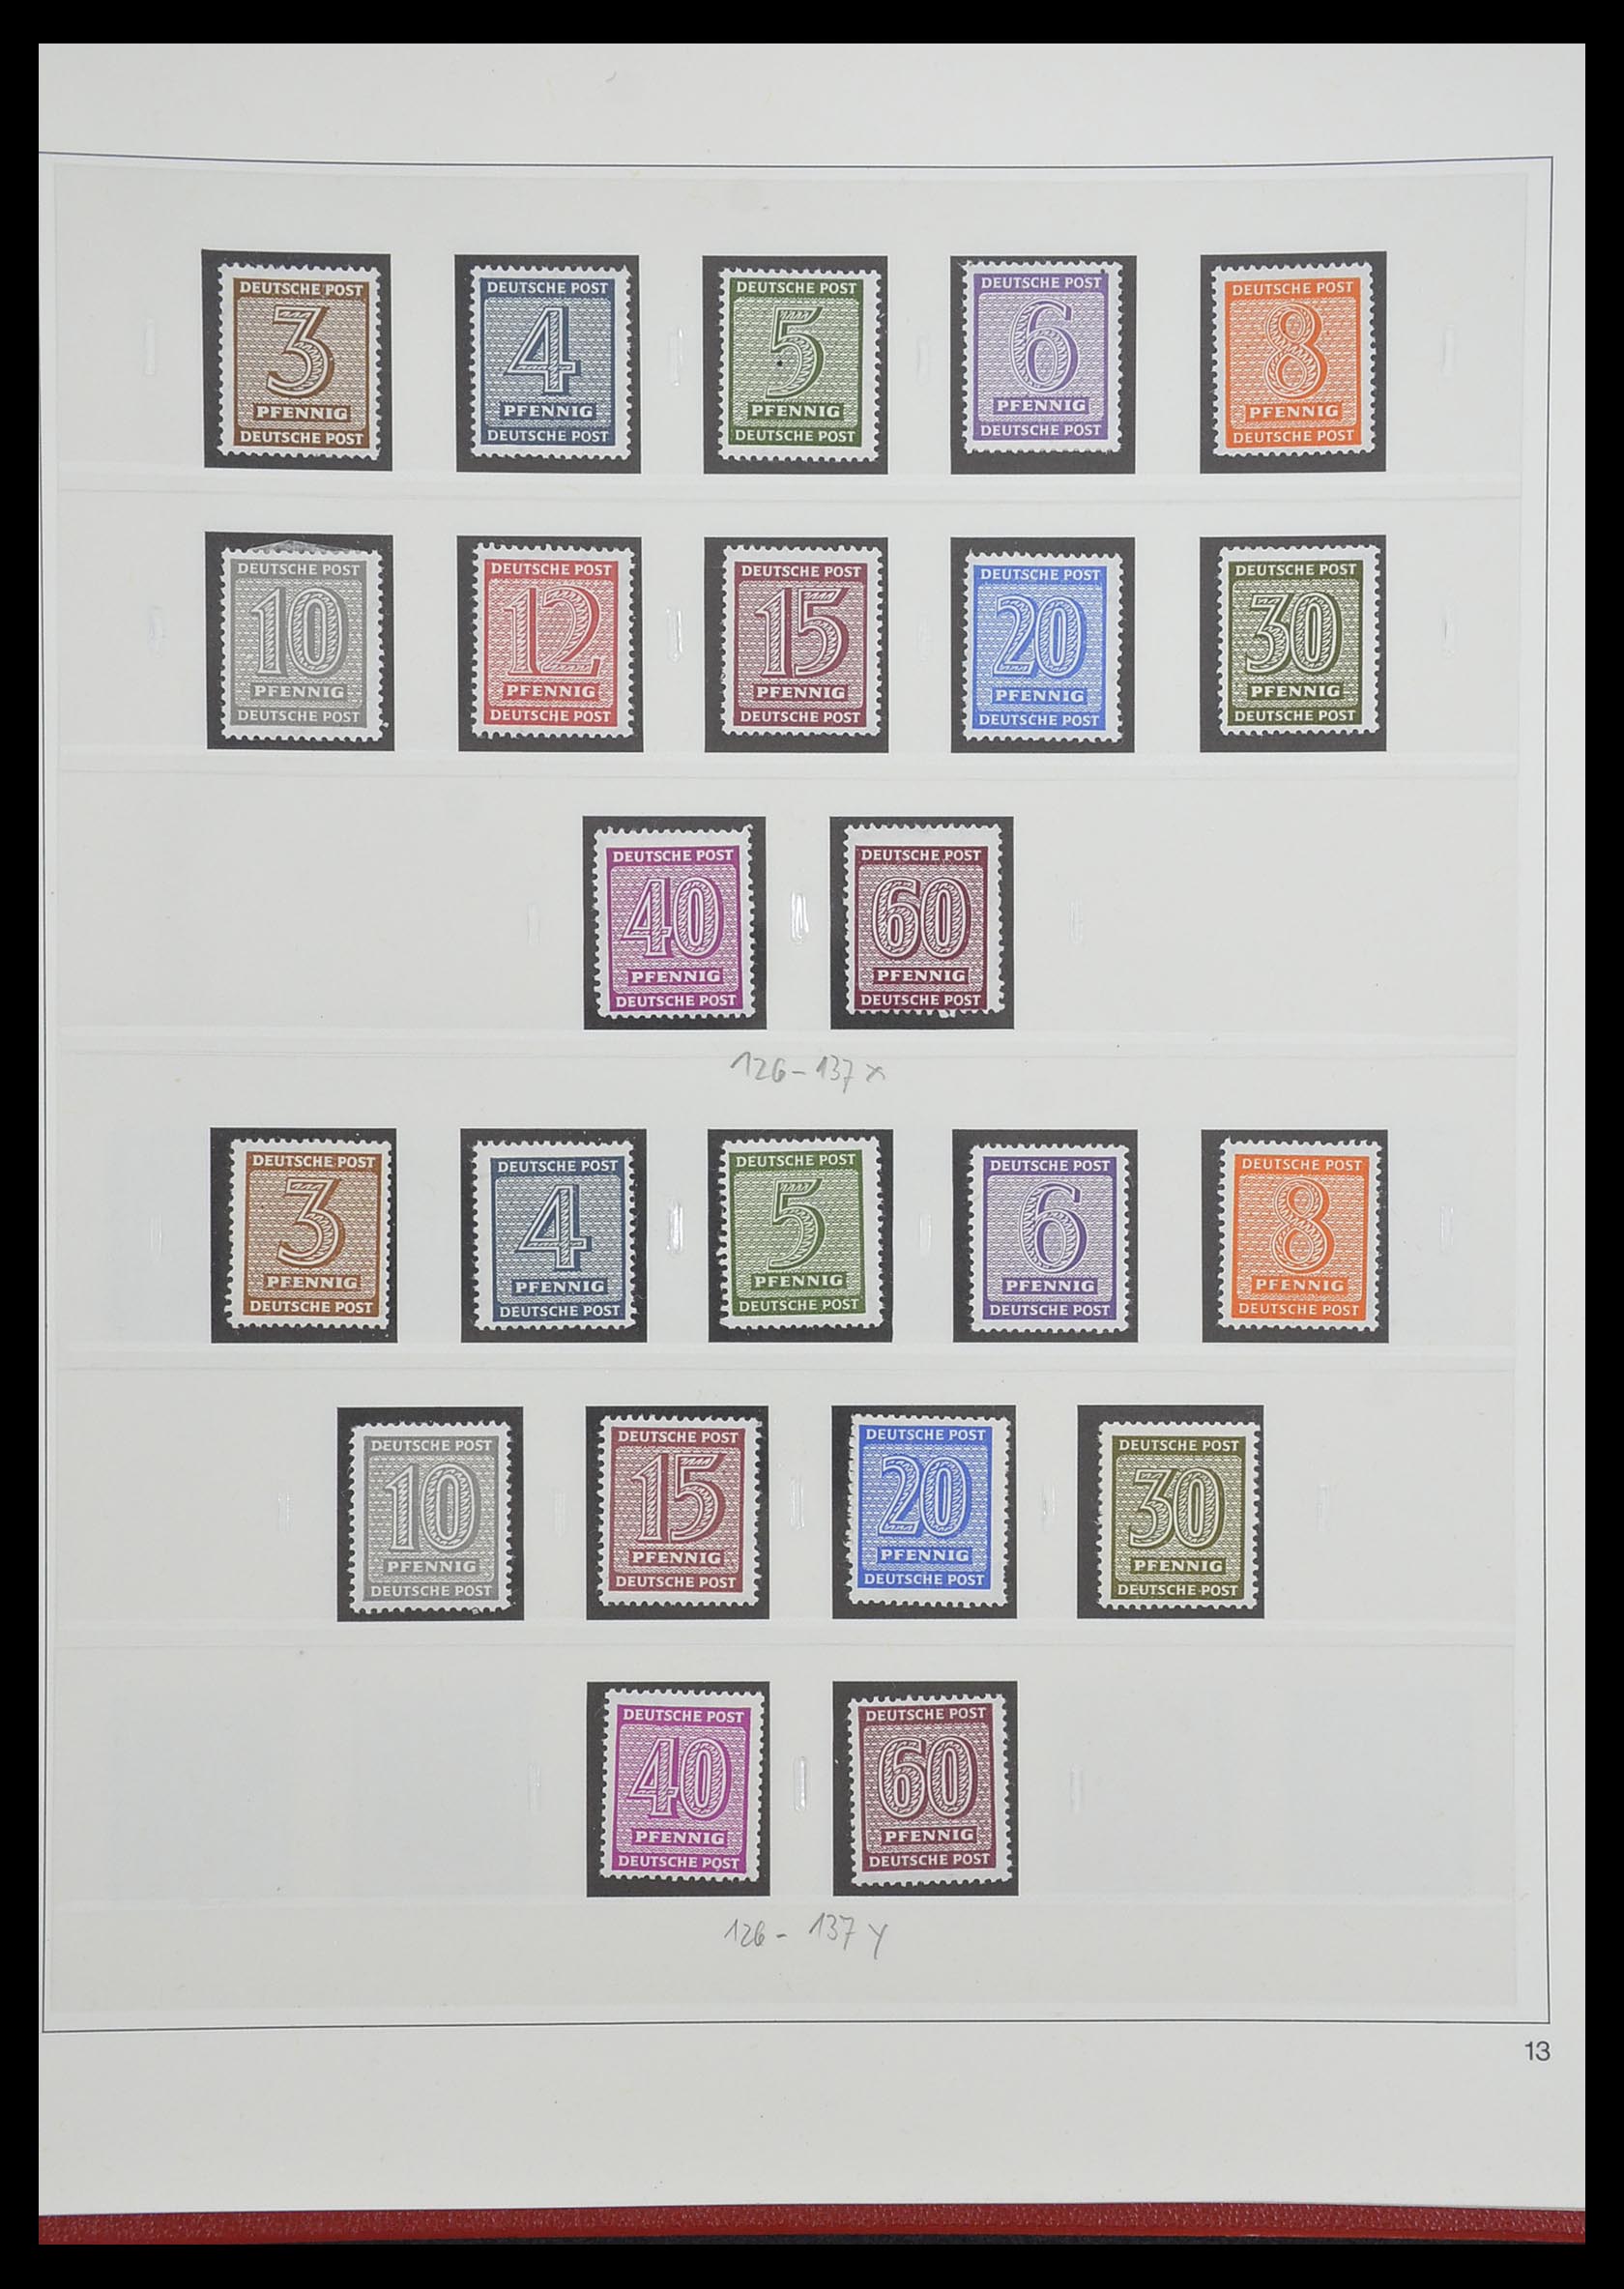 33208 046 - Stamp collection 33208 German Zones 1945-1949.